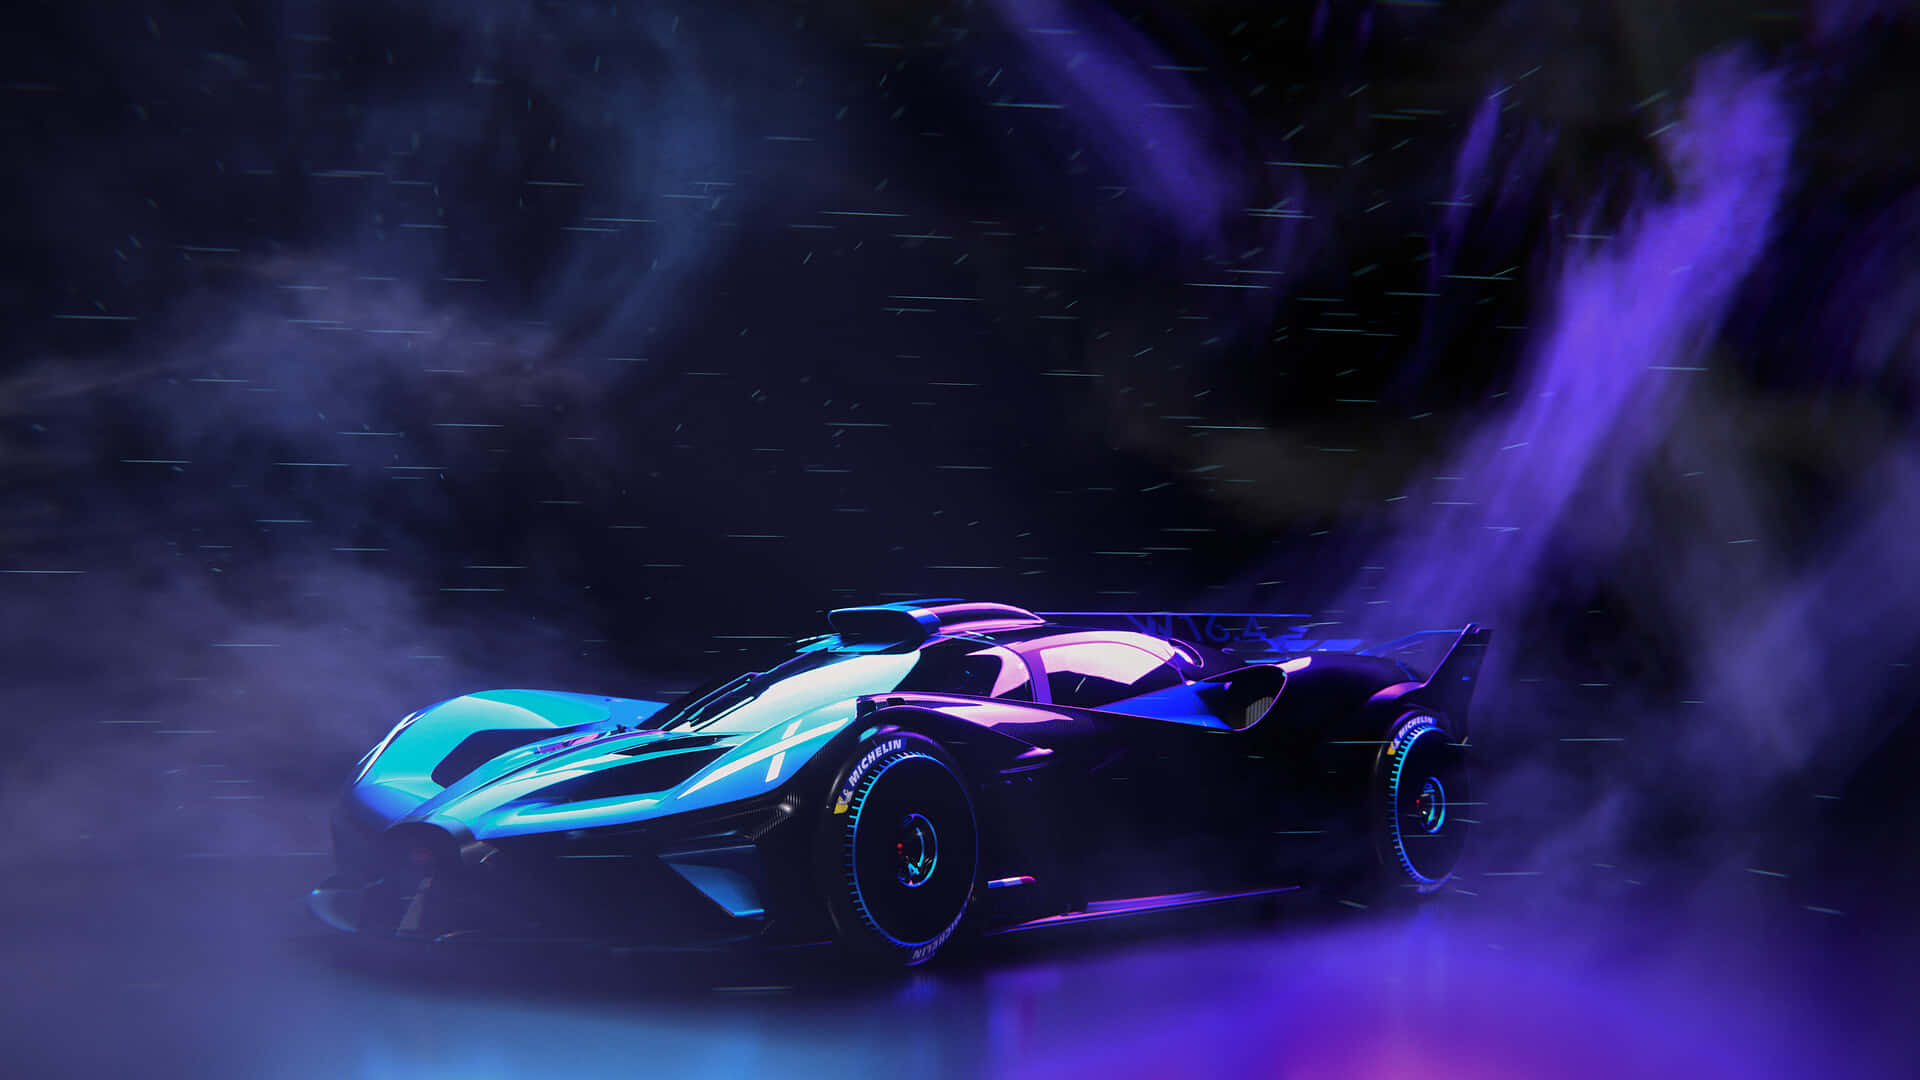 "Eye-catching Neon Bugatti" Wallpaper